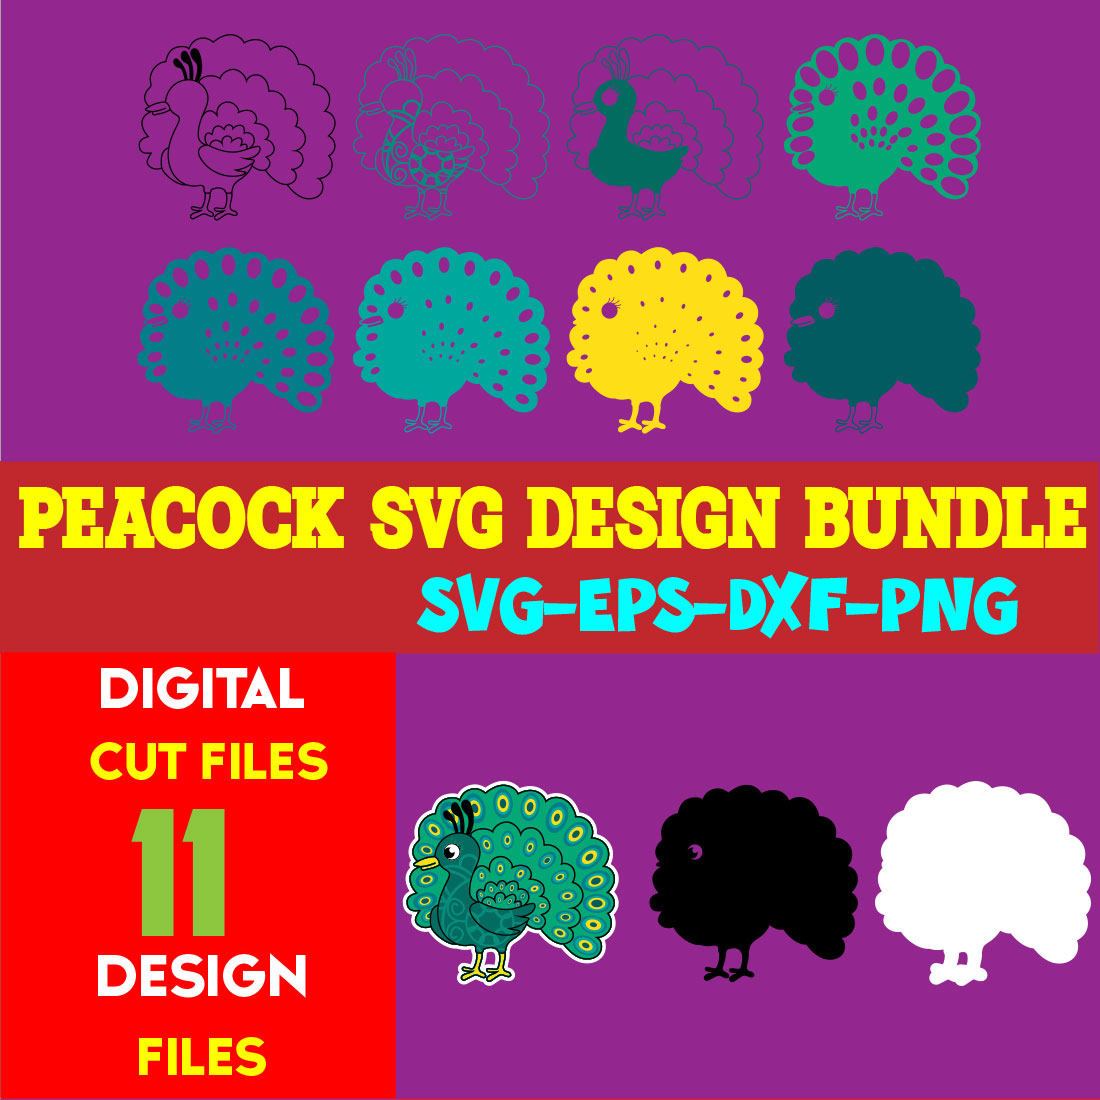 Peacock SVG Design Bundle cover image.